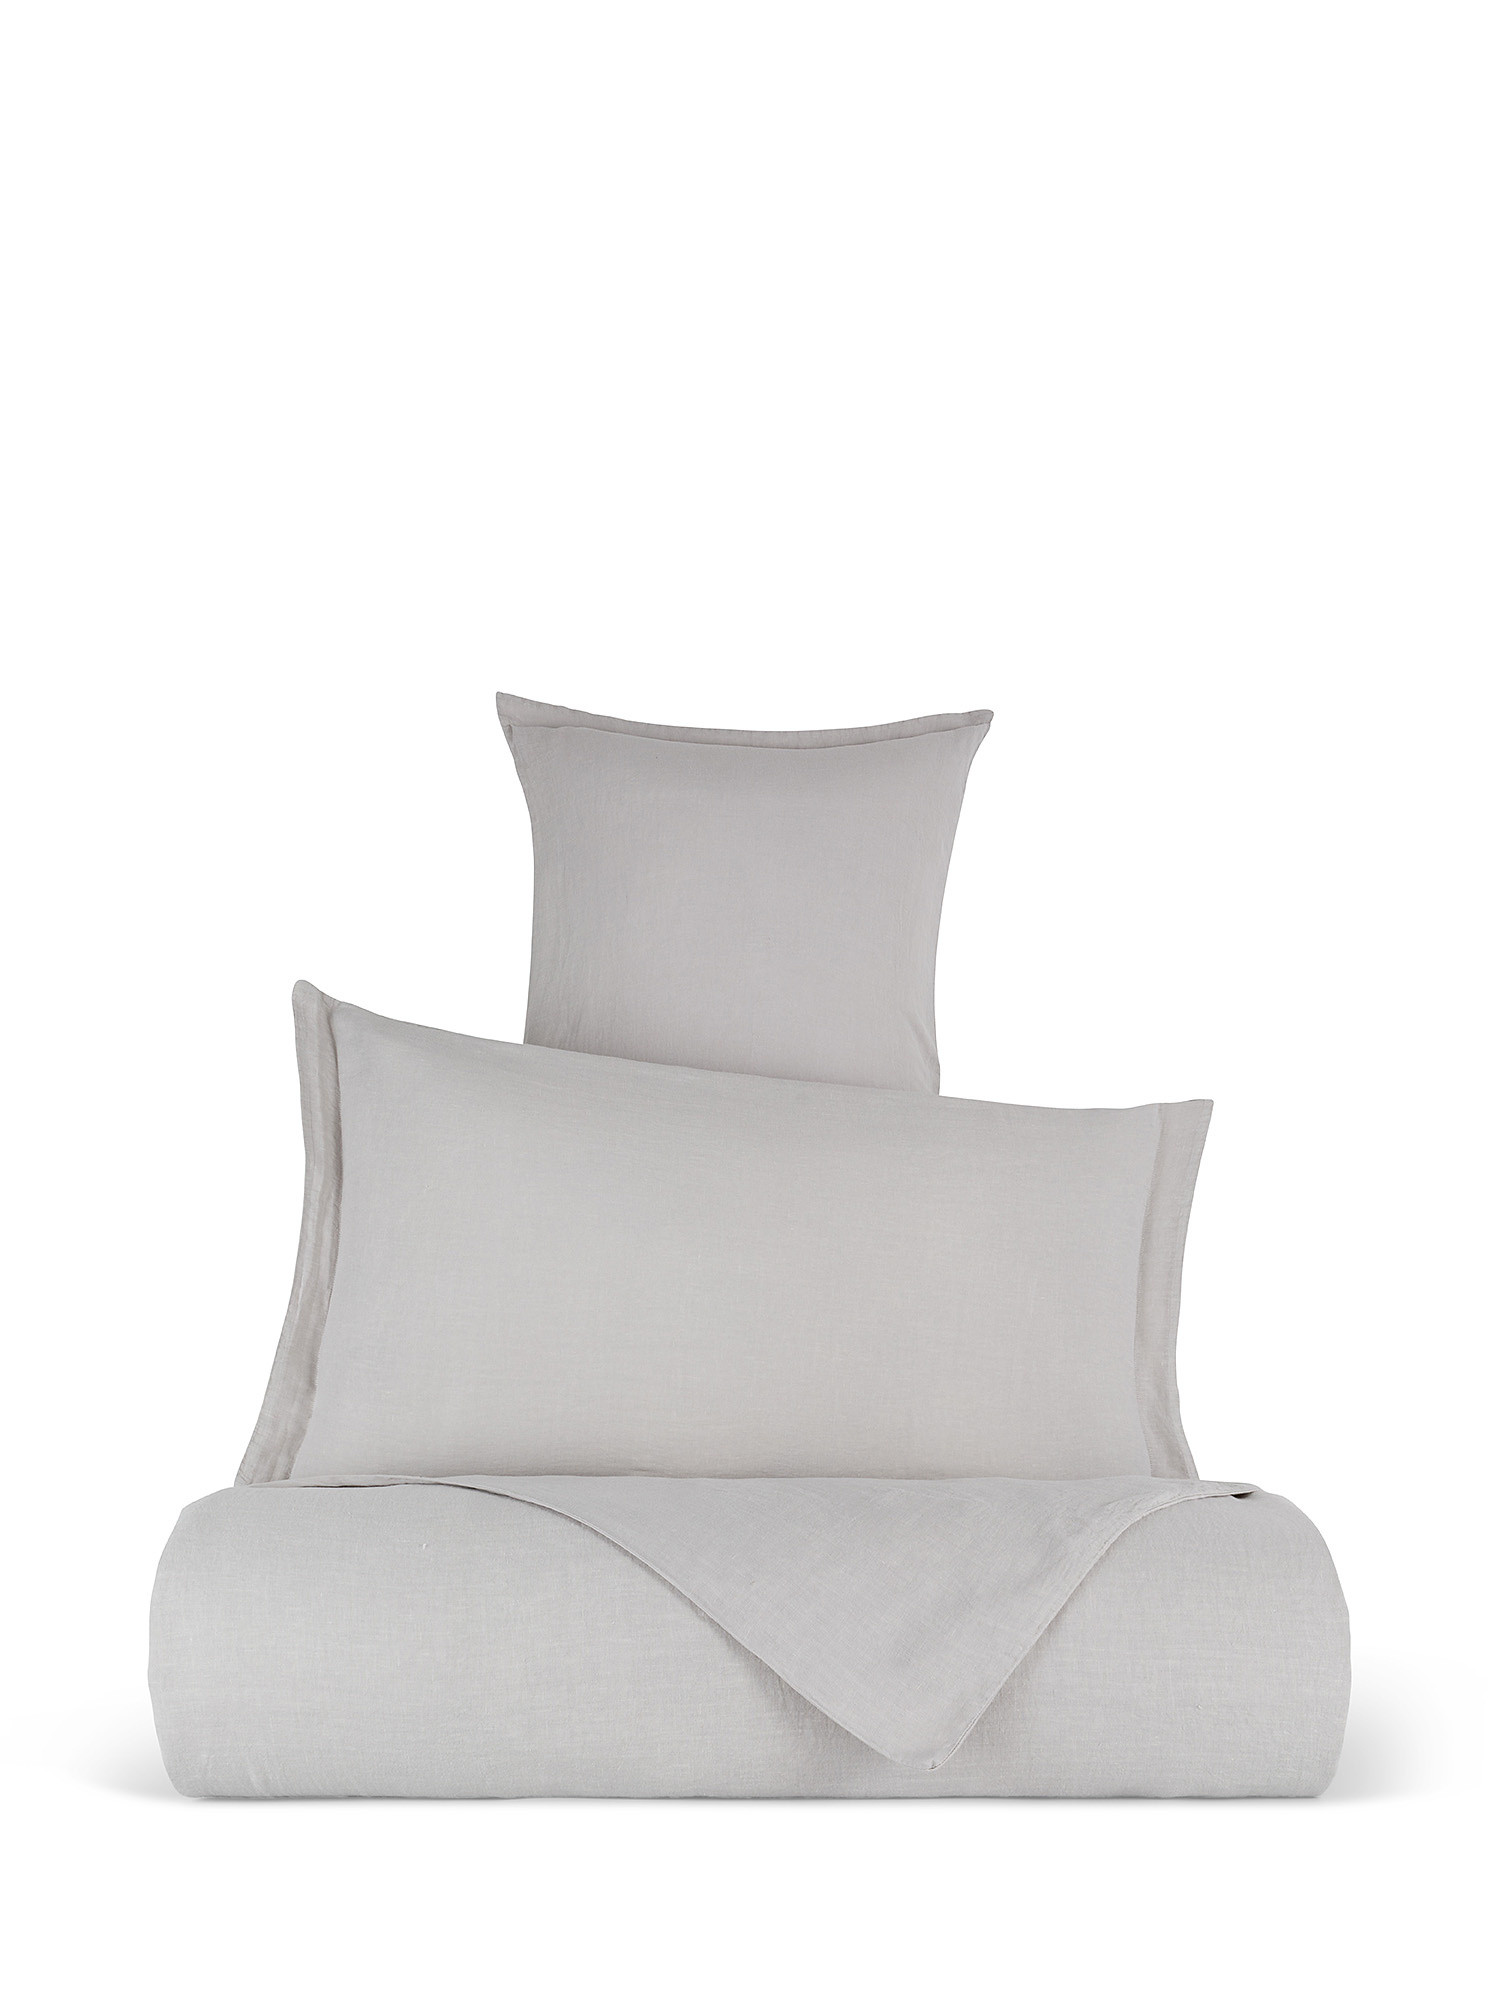 Zefiro plain color linen and cotton pillowcase, Light Grey, large image number 2